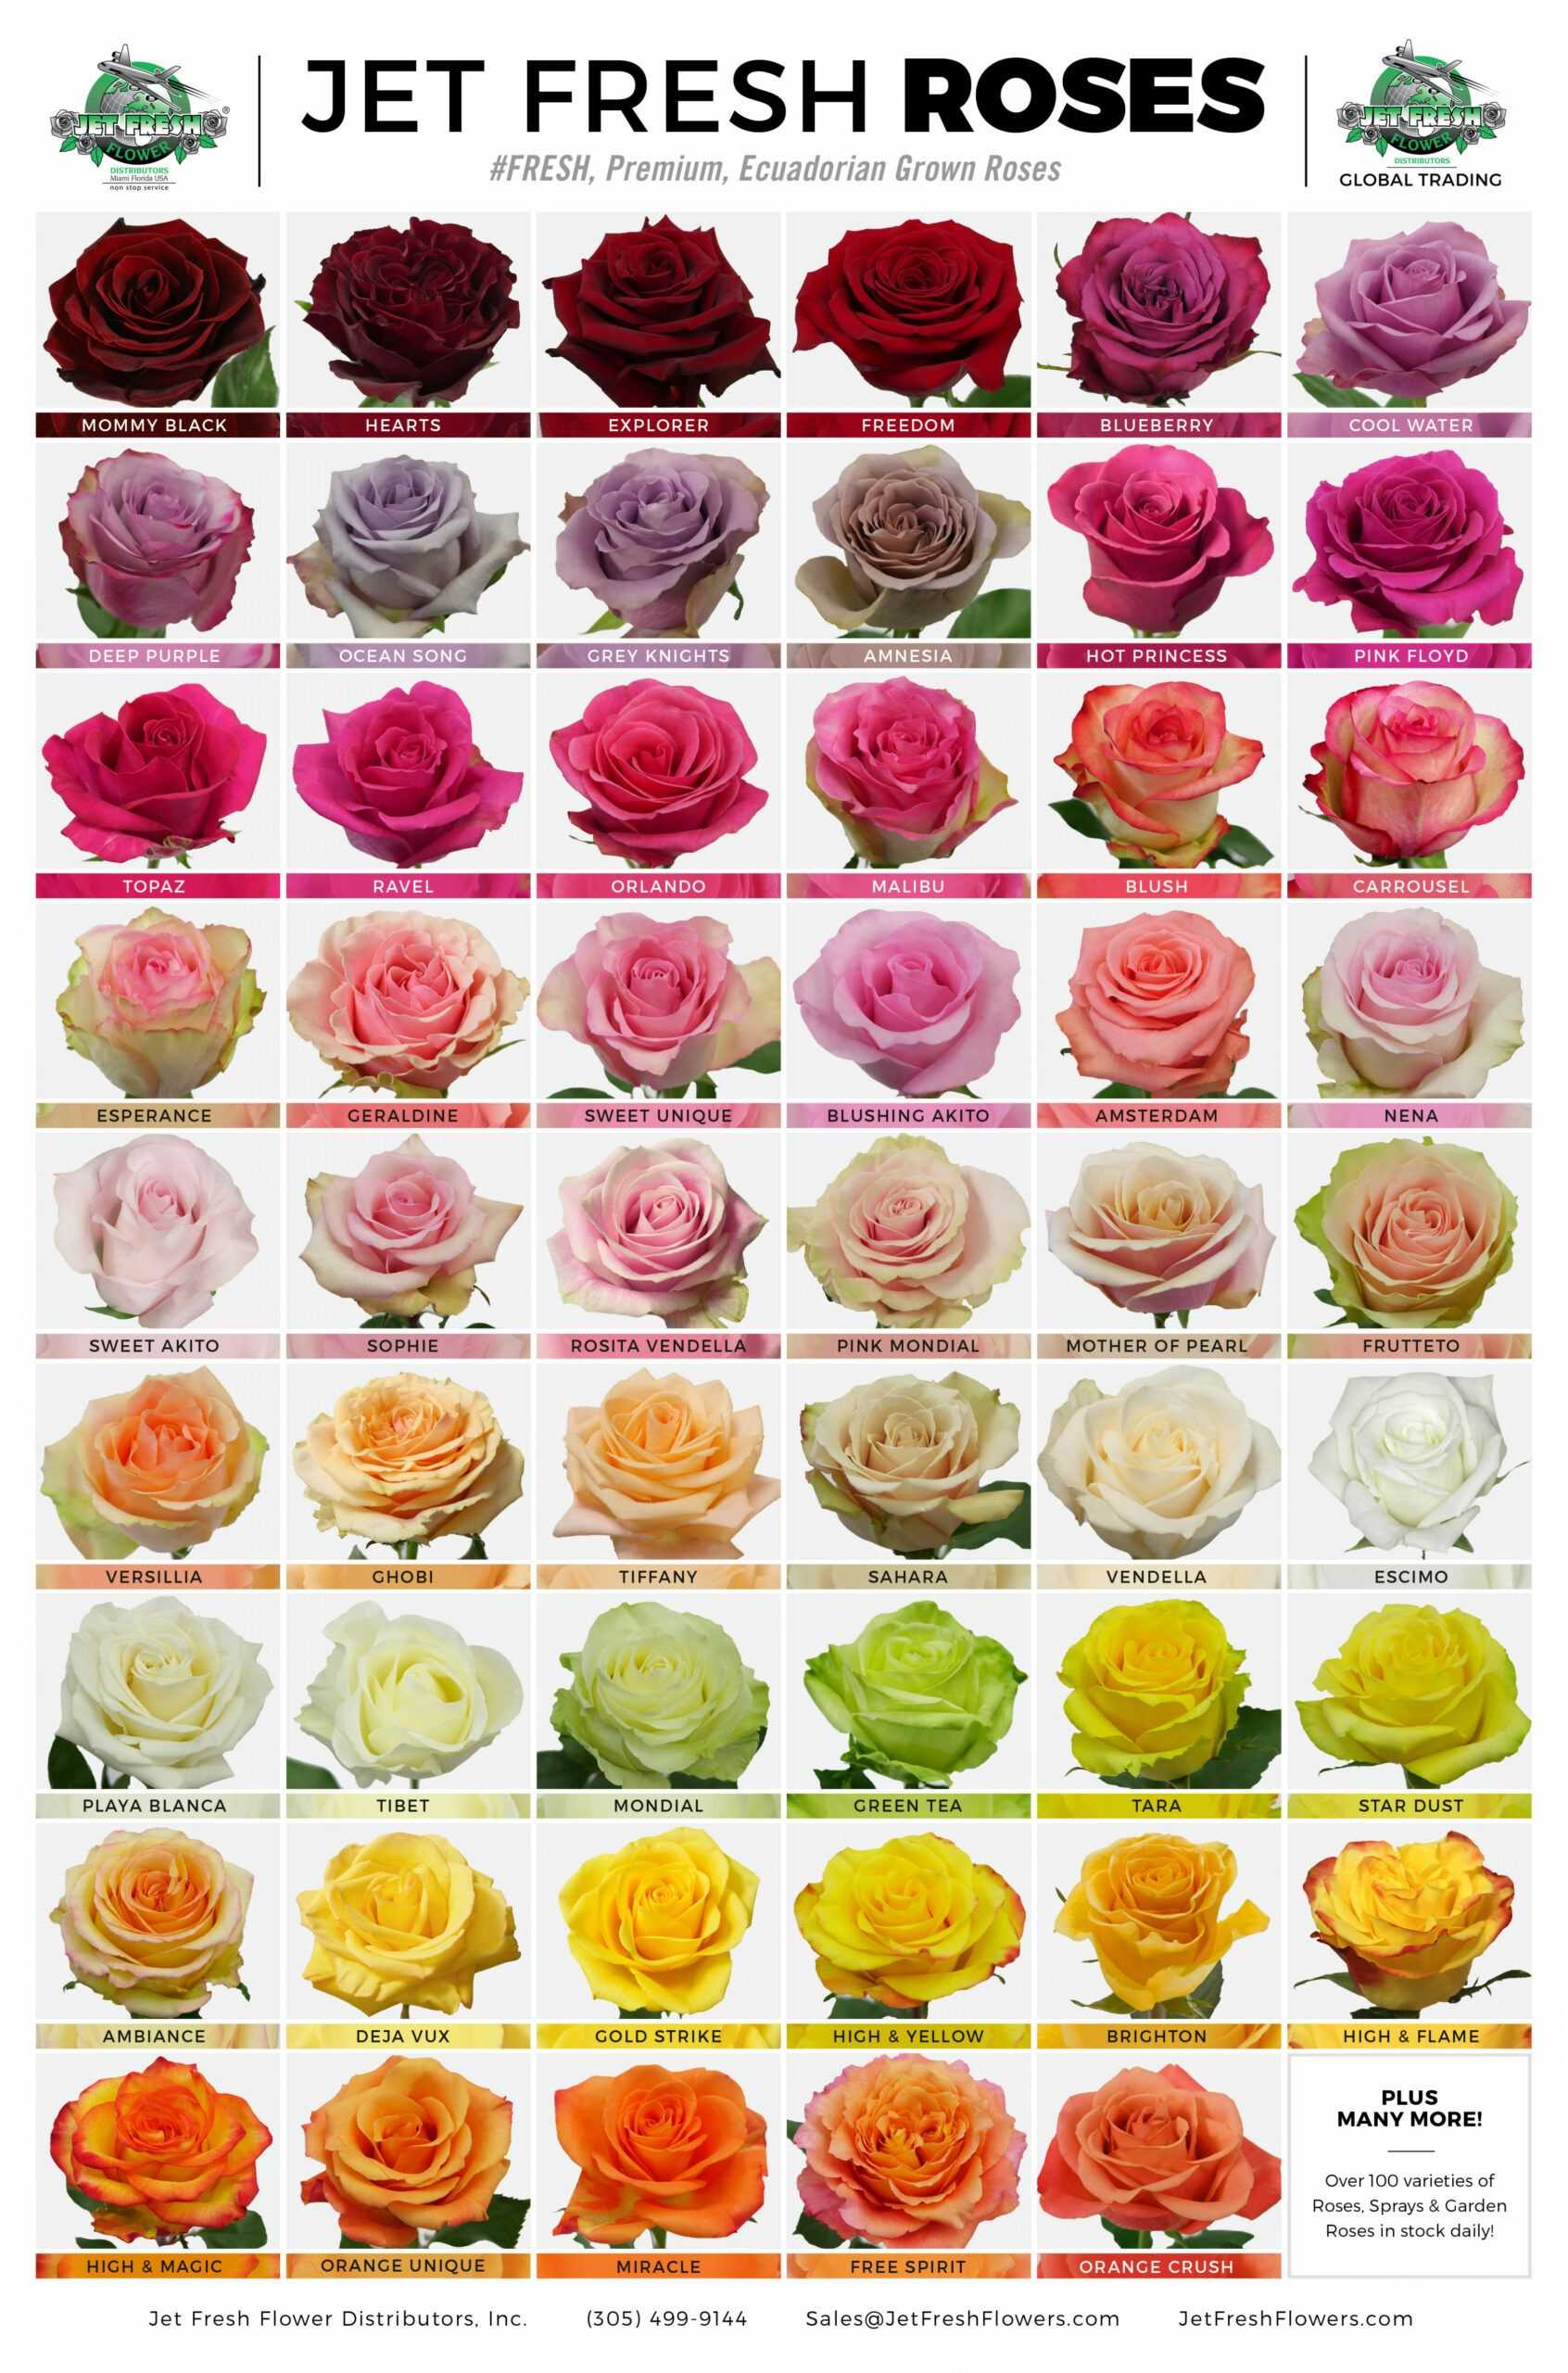 Разновидности роз с фото и описанием на русском